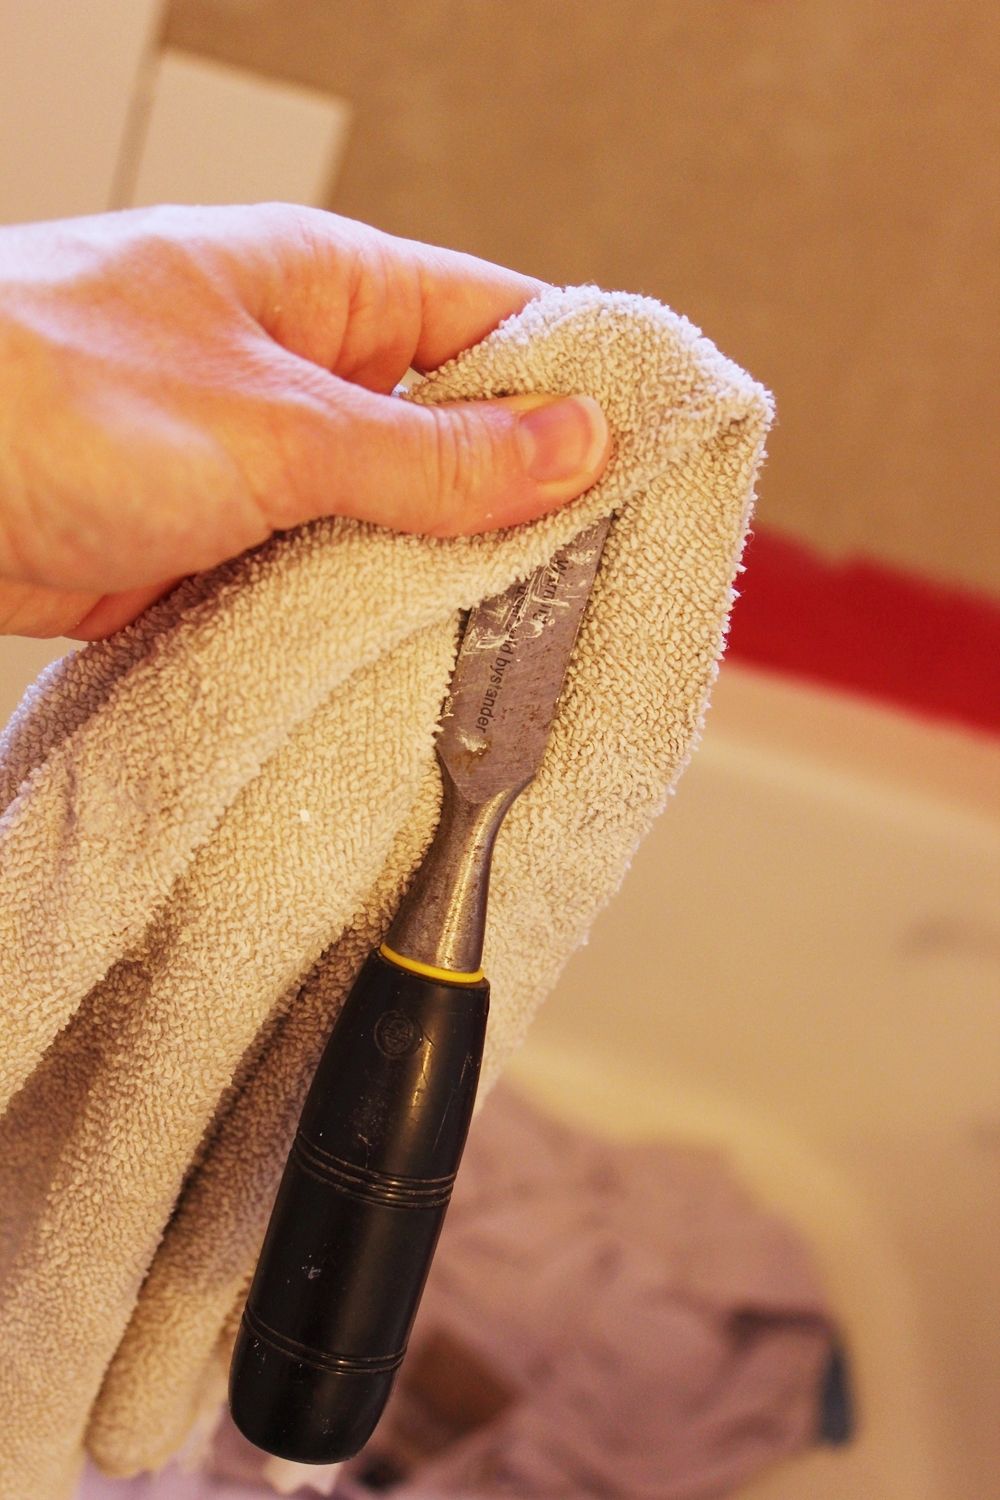 DIY Tile Shower Tub Surround - towel cleaning